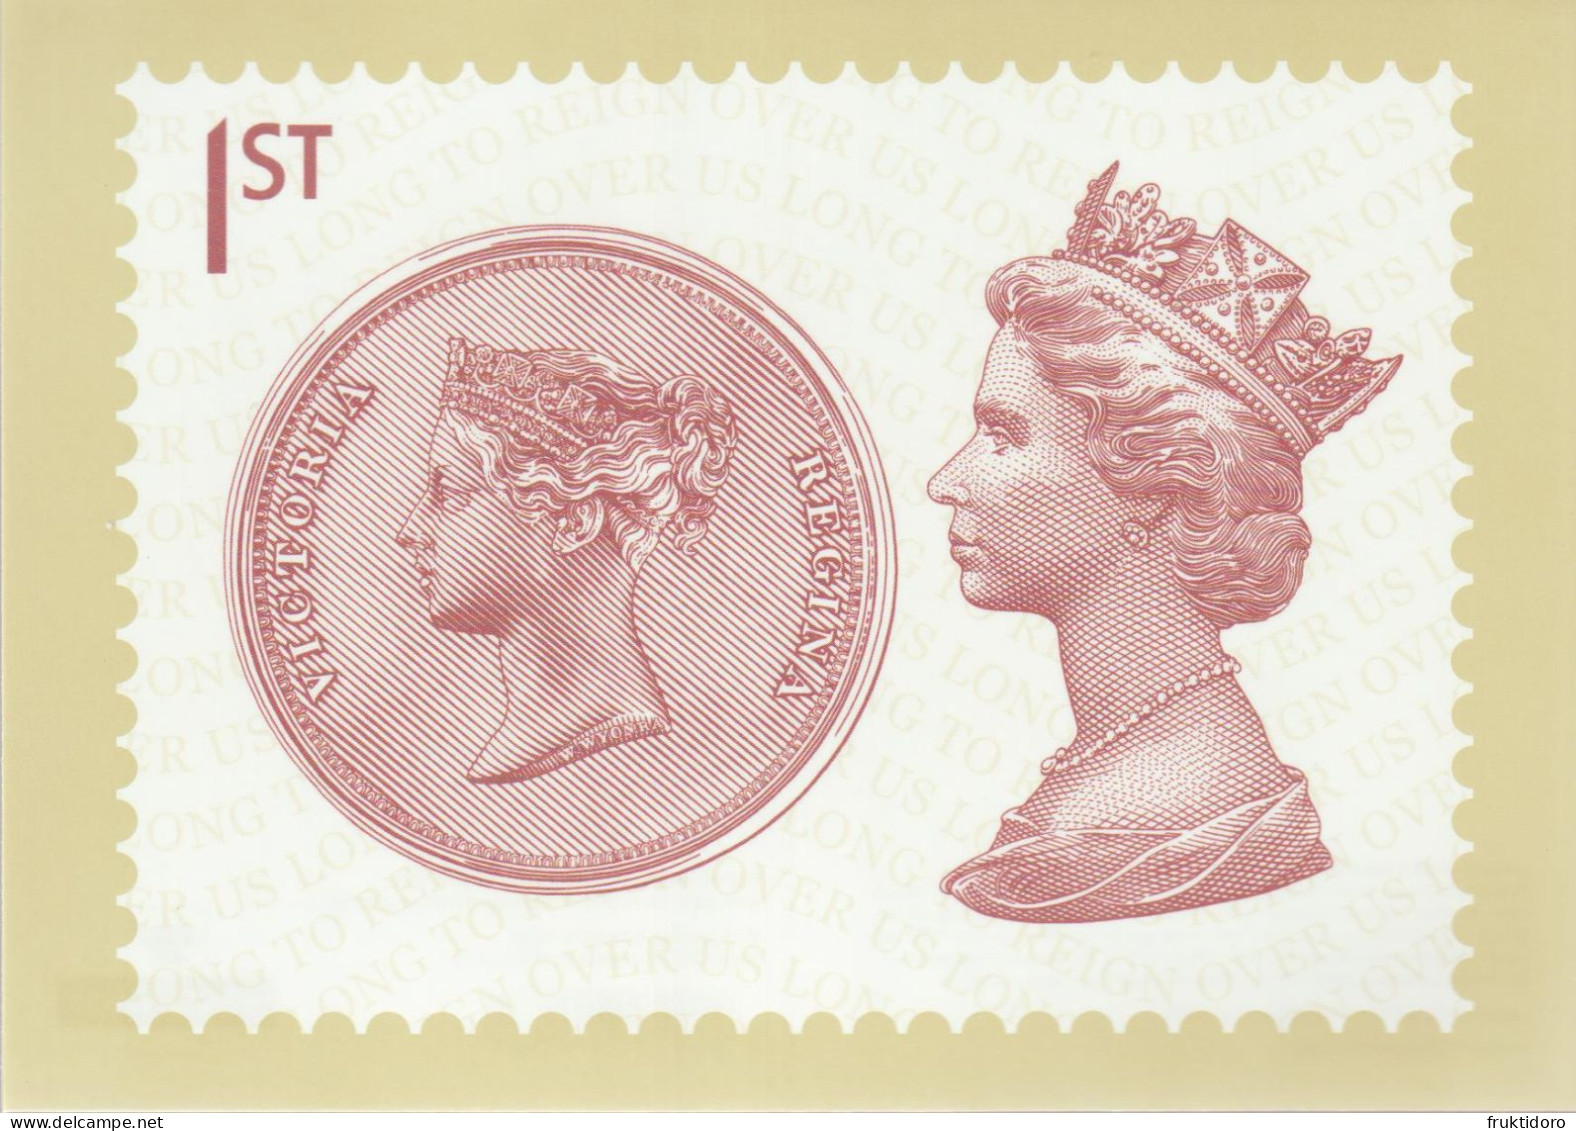 United Kingdom Postcards 2015 About Stamps In Mi Block 96 Queen Elizabeth II - Long To Reign Over Us ** - Sammlungen